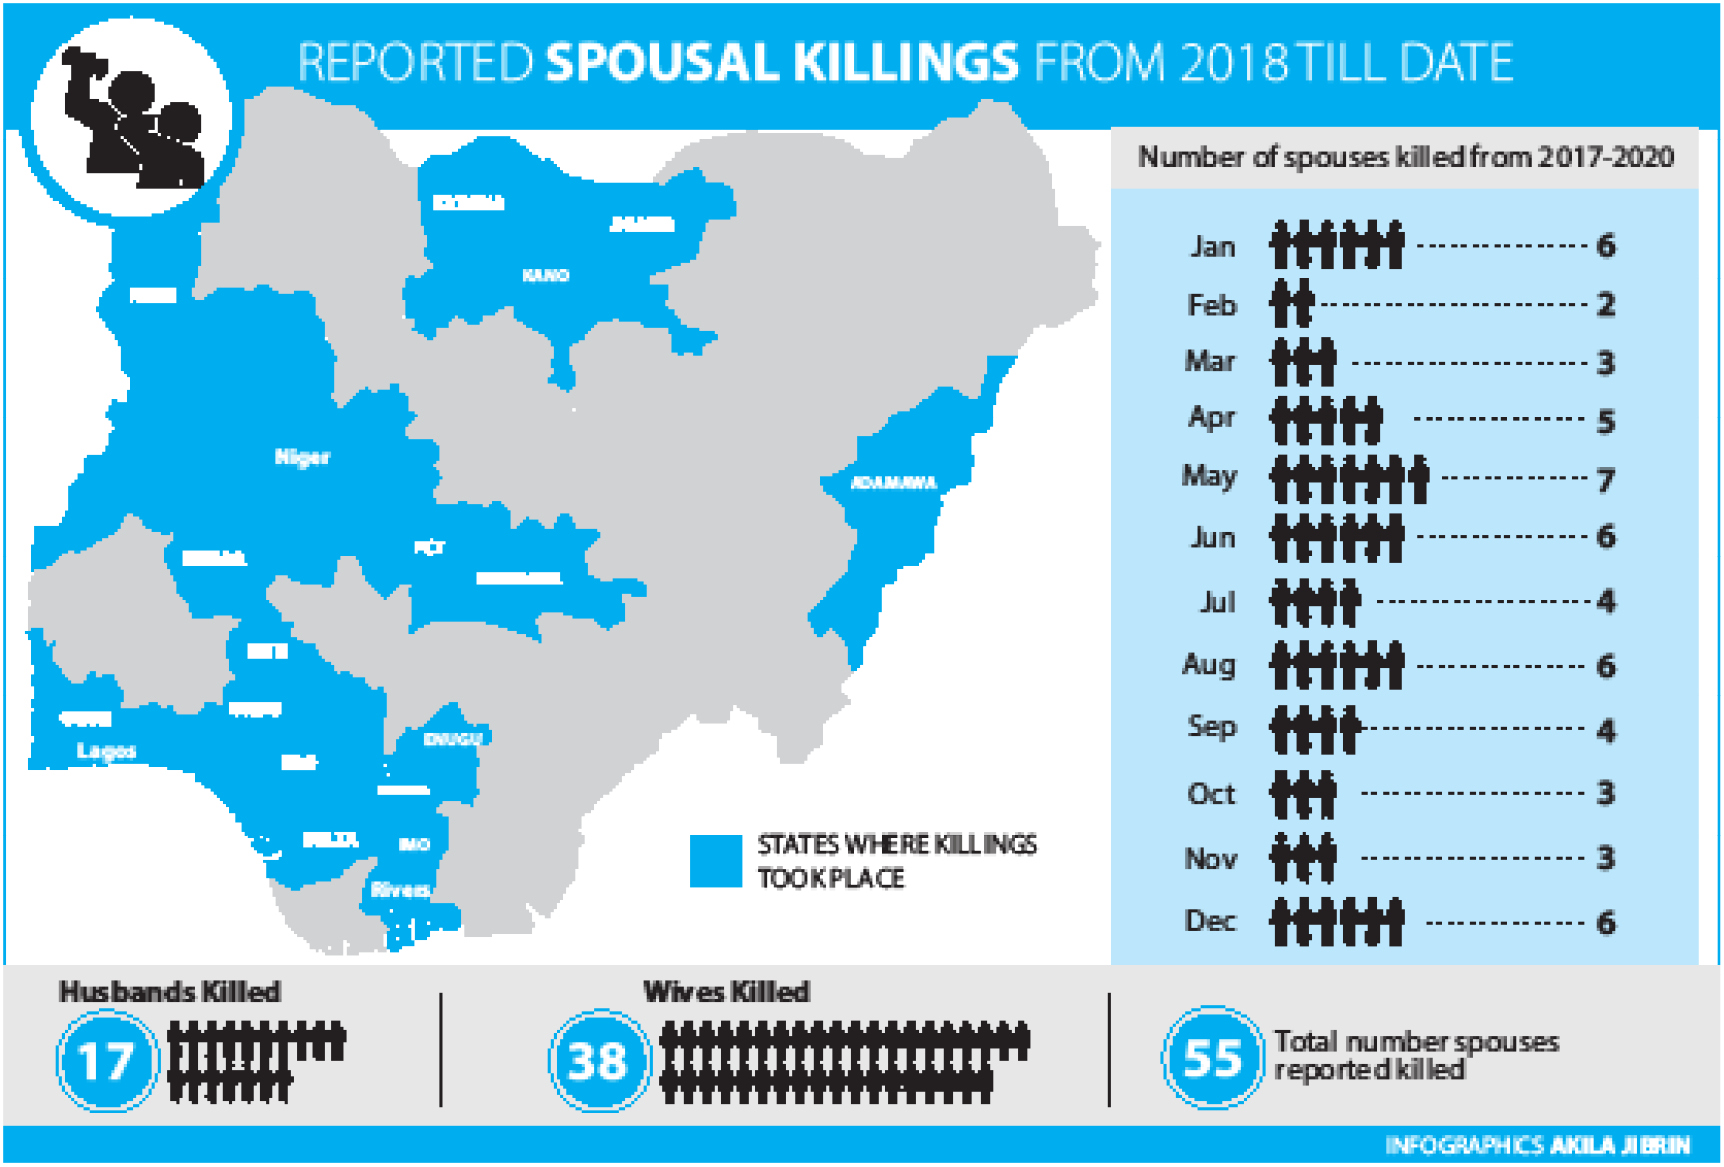 Spousal killings